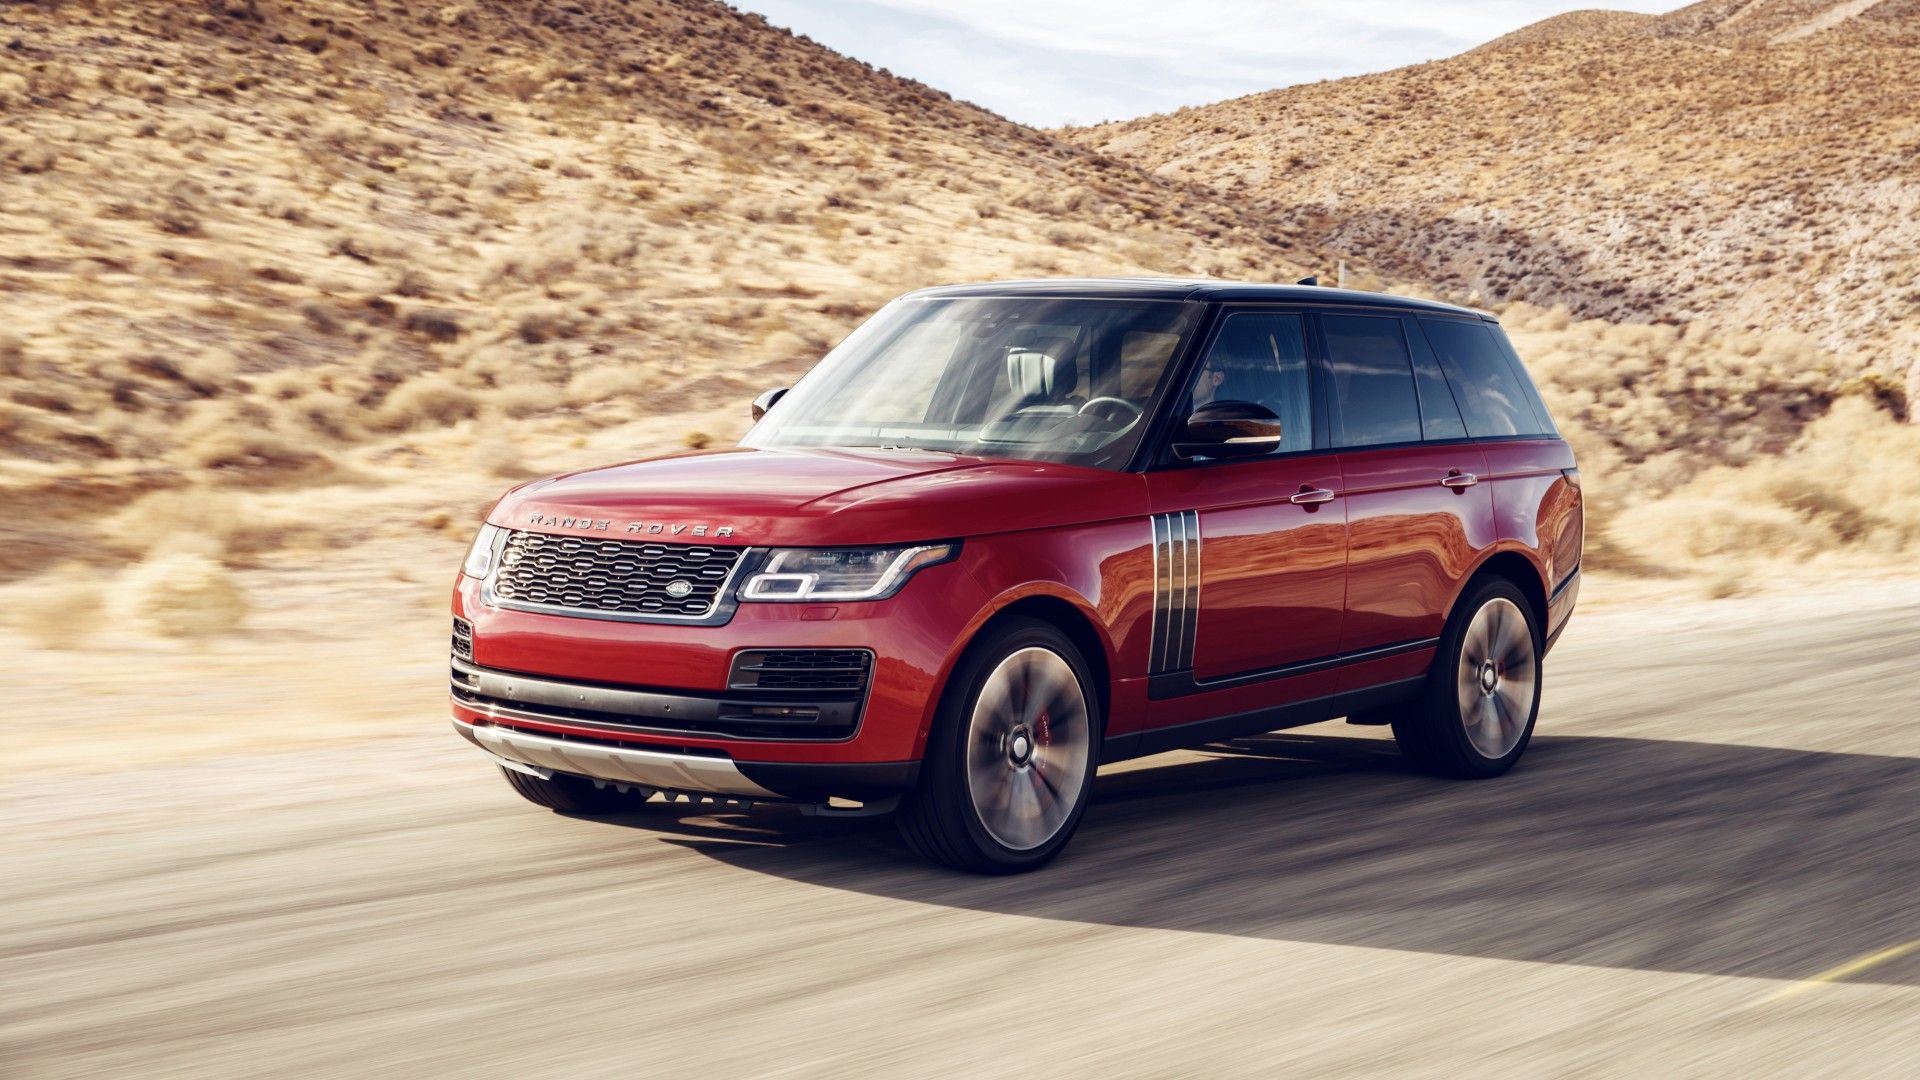 Range Rover 1080p background